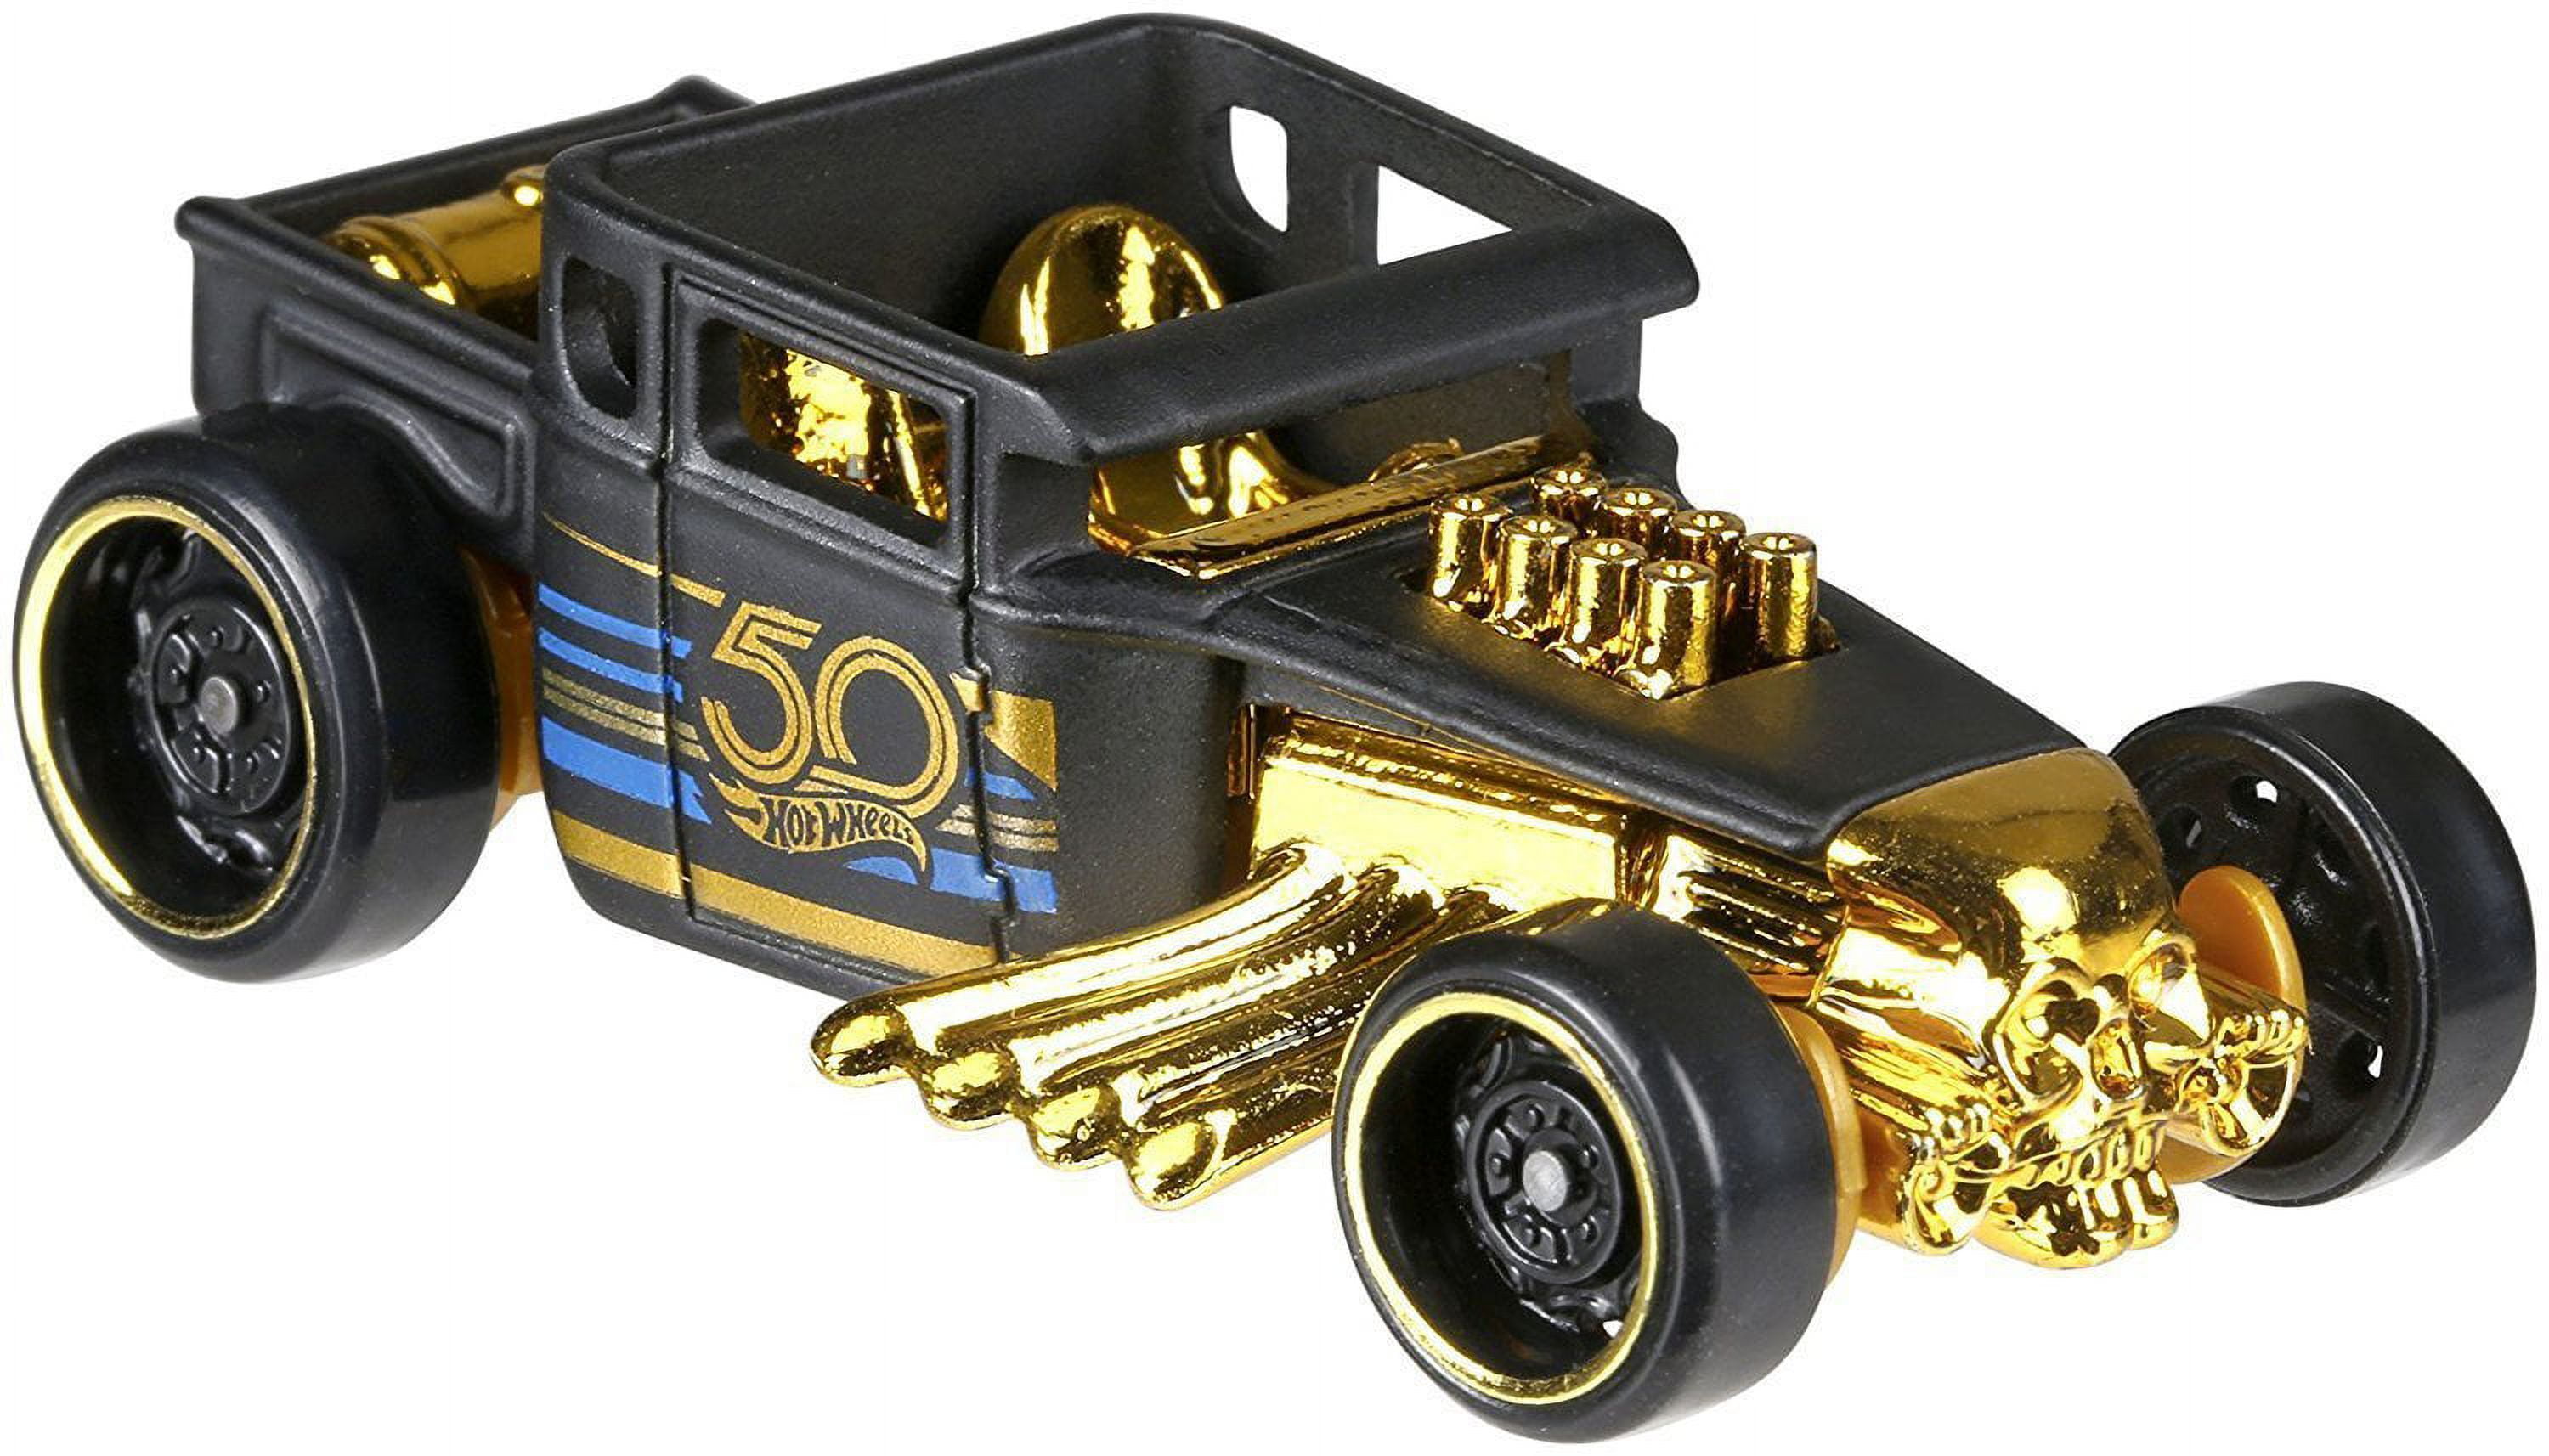 Купить машинку хотвилс. Машинка hot Wheels Bone Shaker. Hot Wheels 50th Anniversary Black Gold. Hot Wheels 50th Black Gold. Машинка hot Wheels Bone Shaker Gold коллекционная.